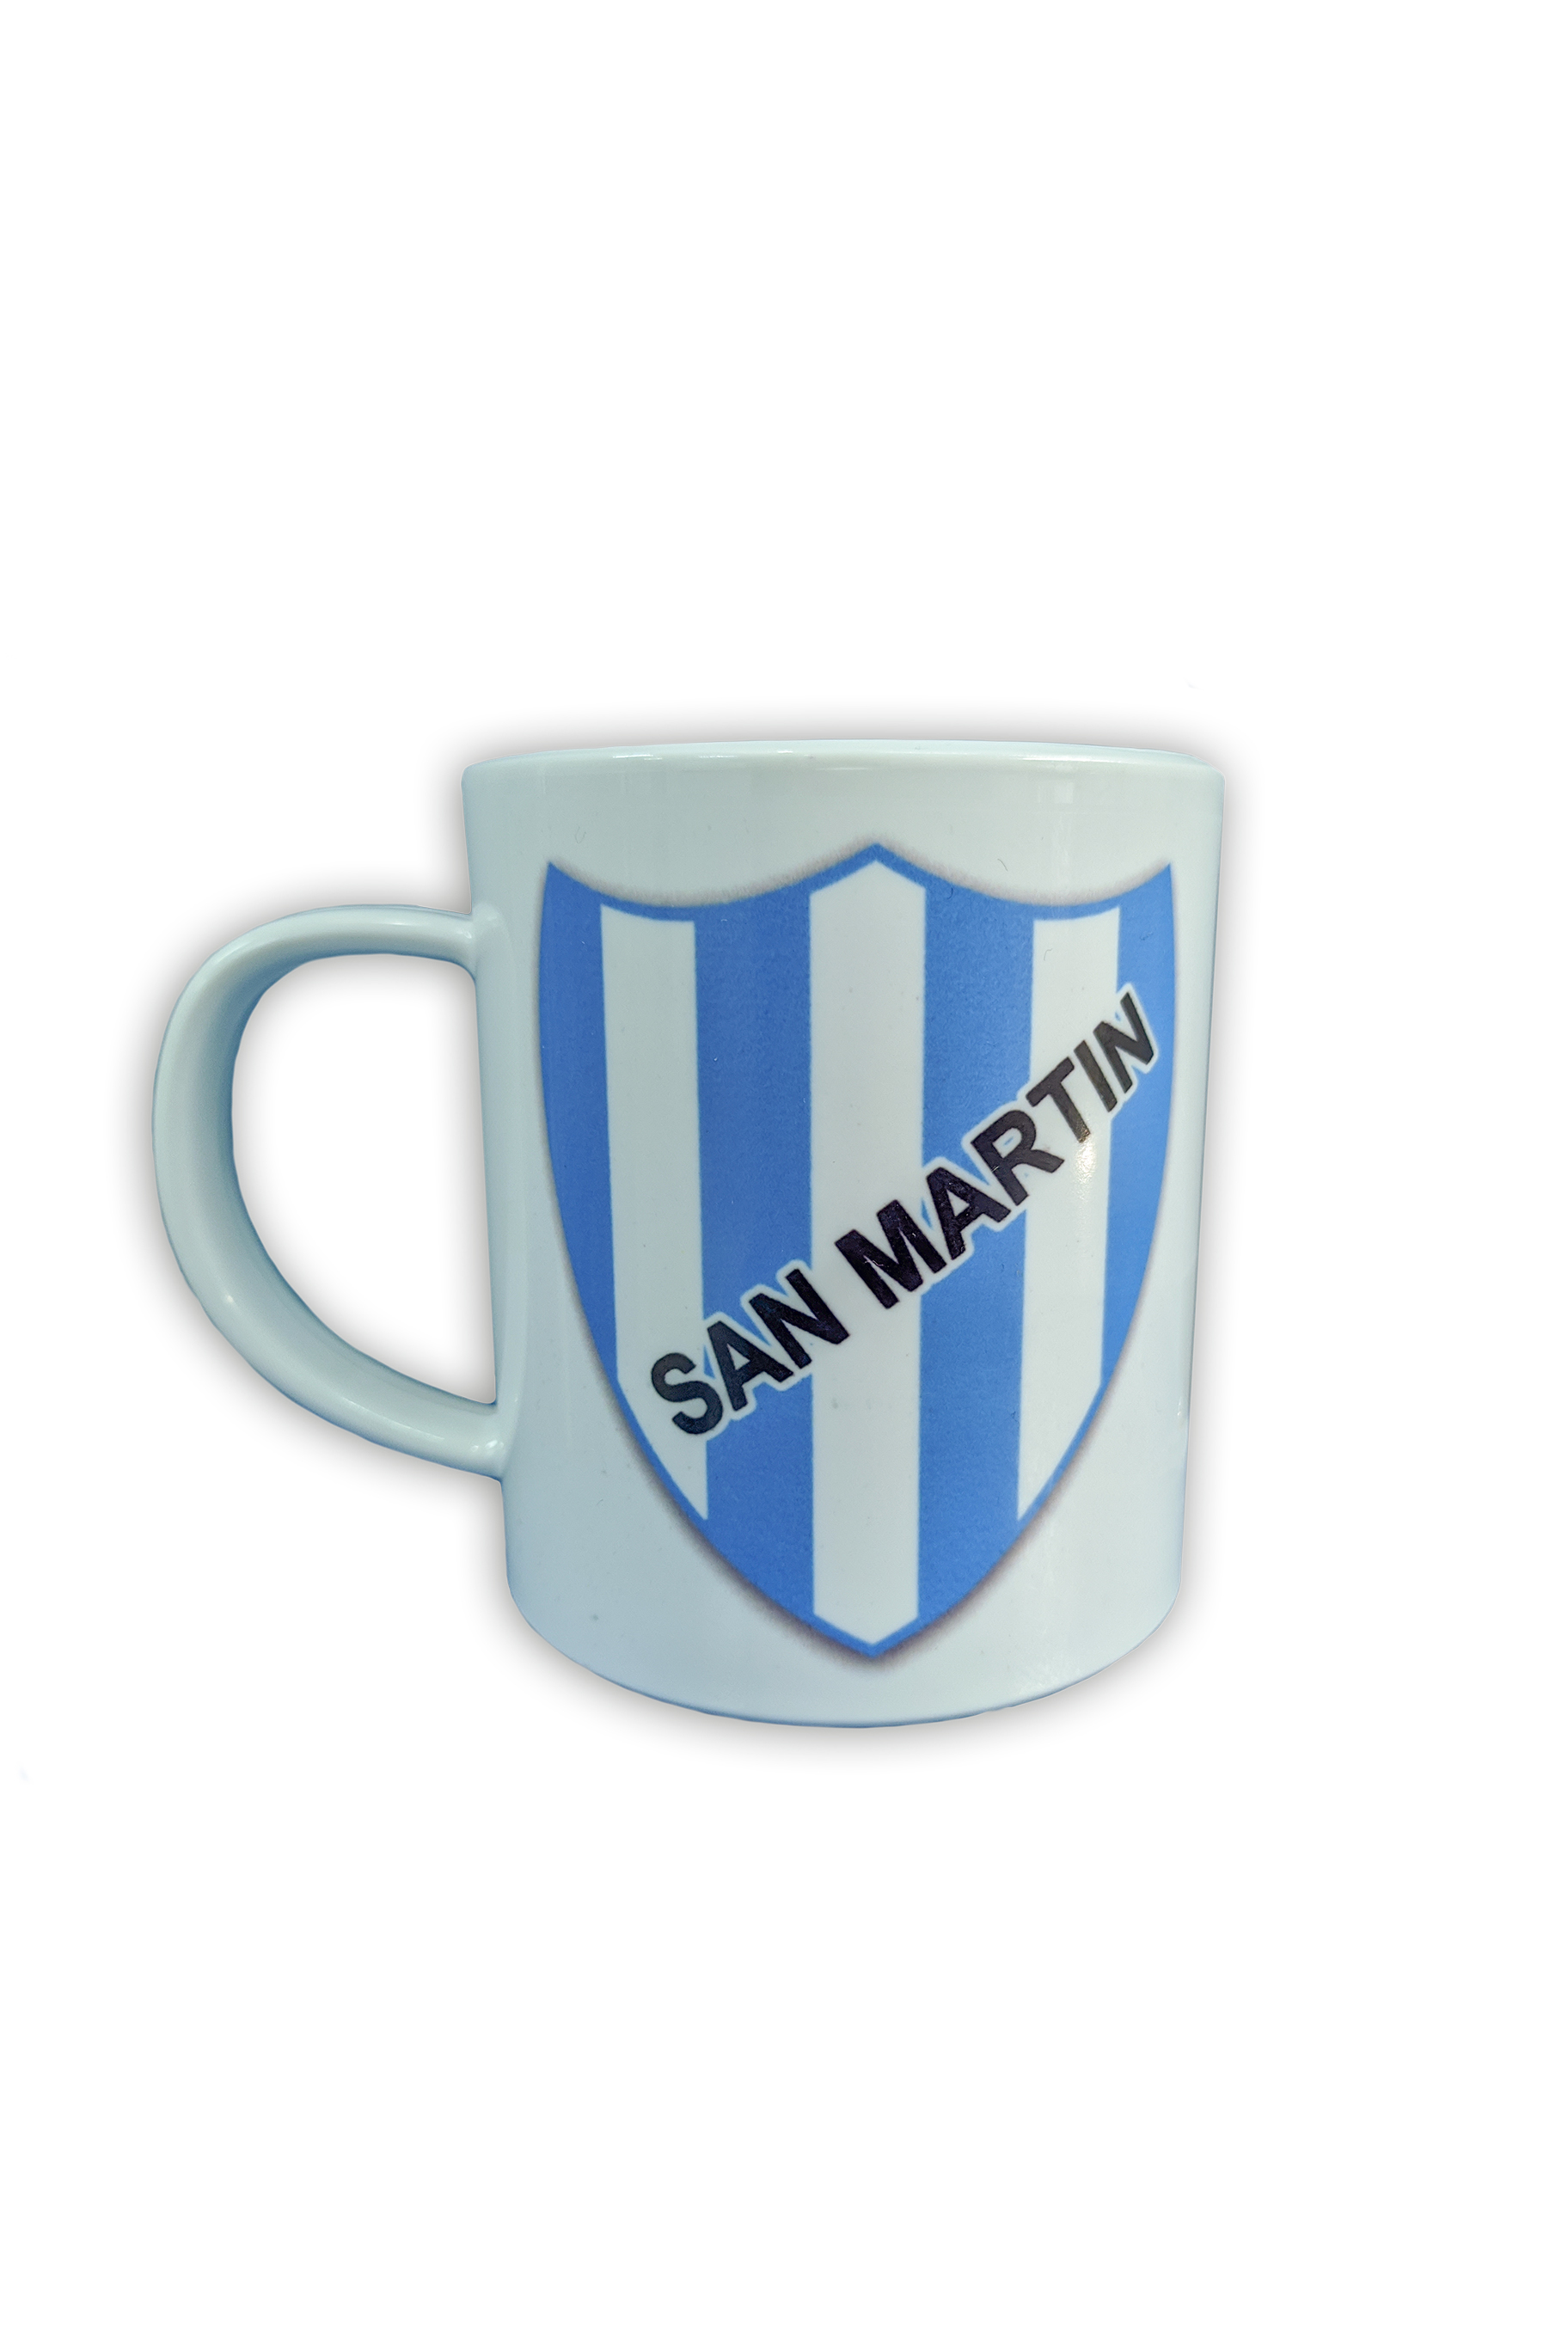 merchandising Club San Martin